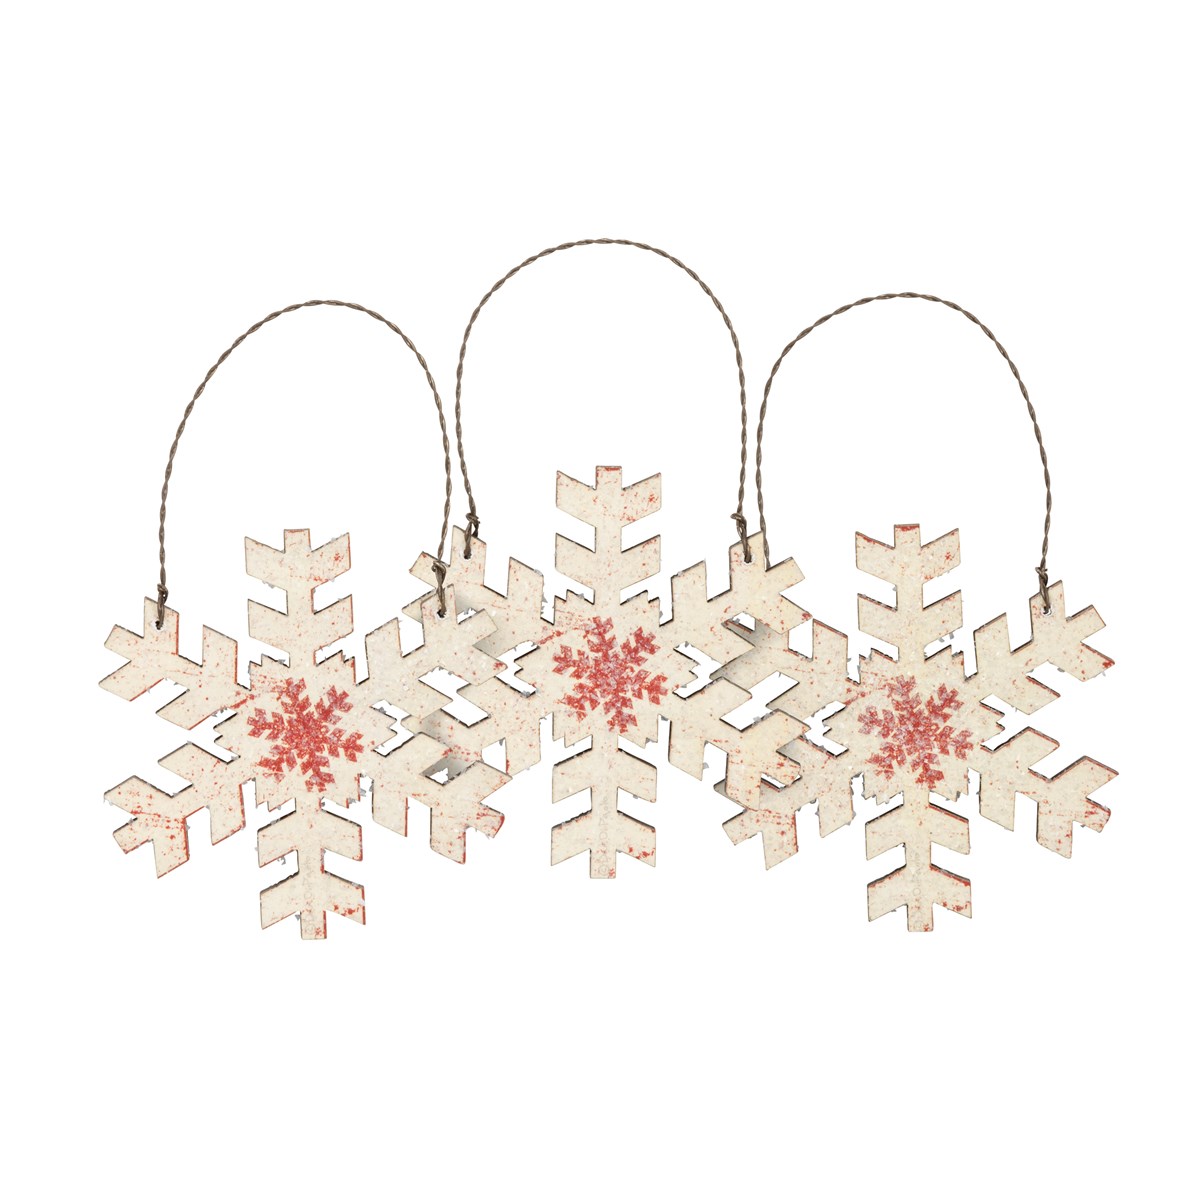 Ornament Set - Cream Snowflake - 3.50" x 3.50" - Wood, Paper, Wire, Mica